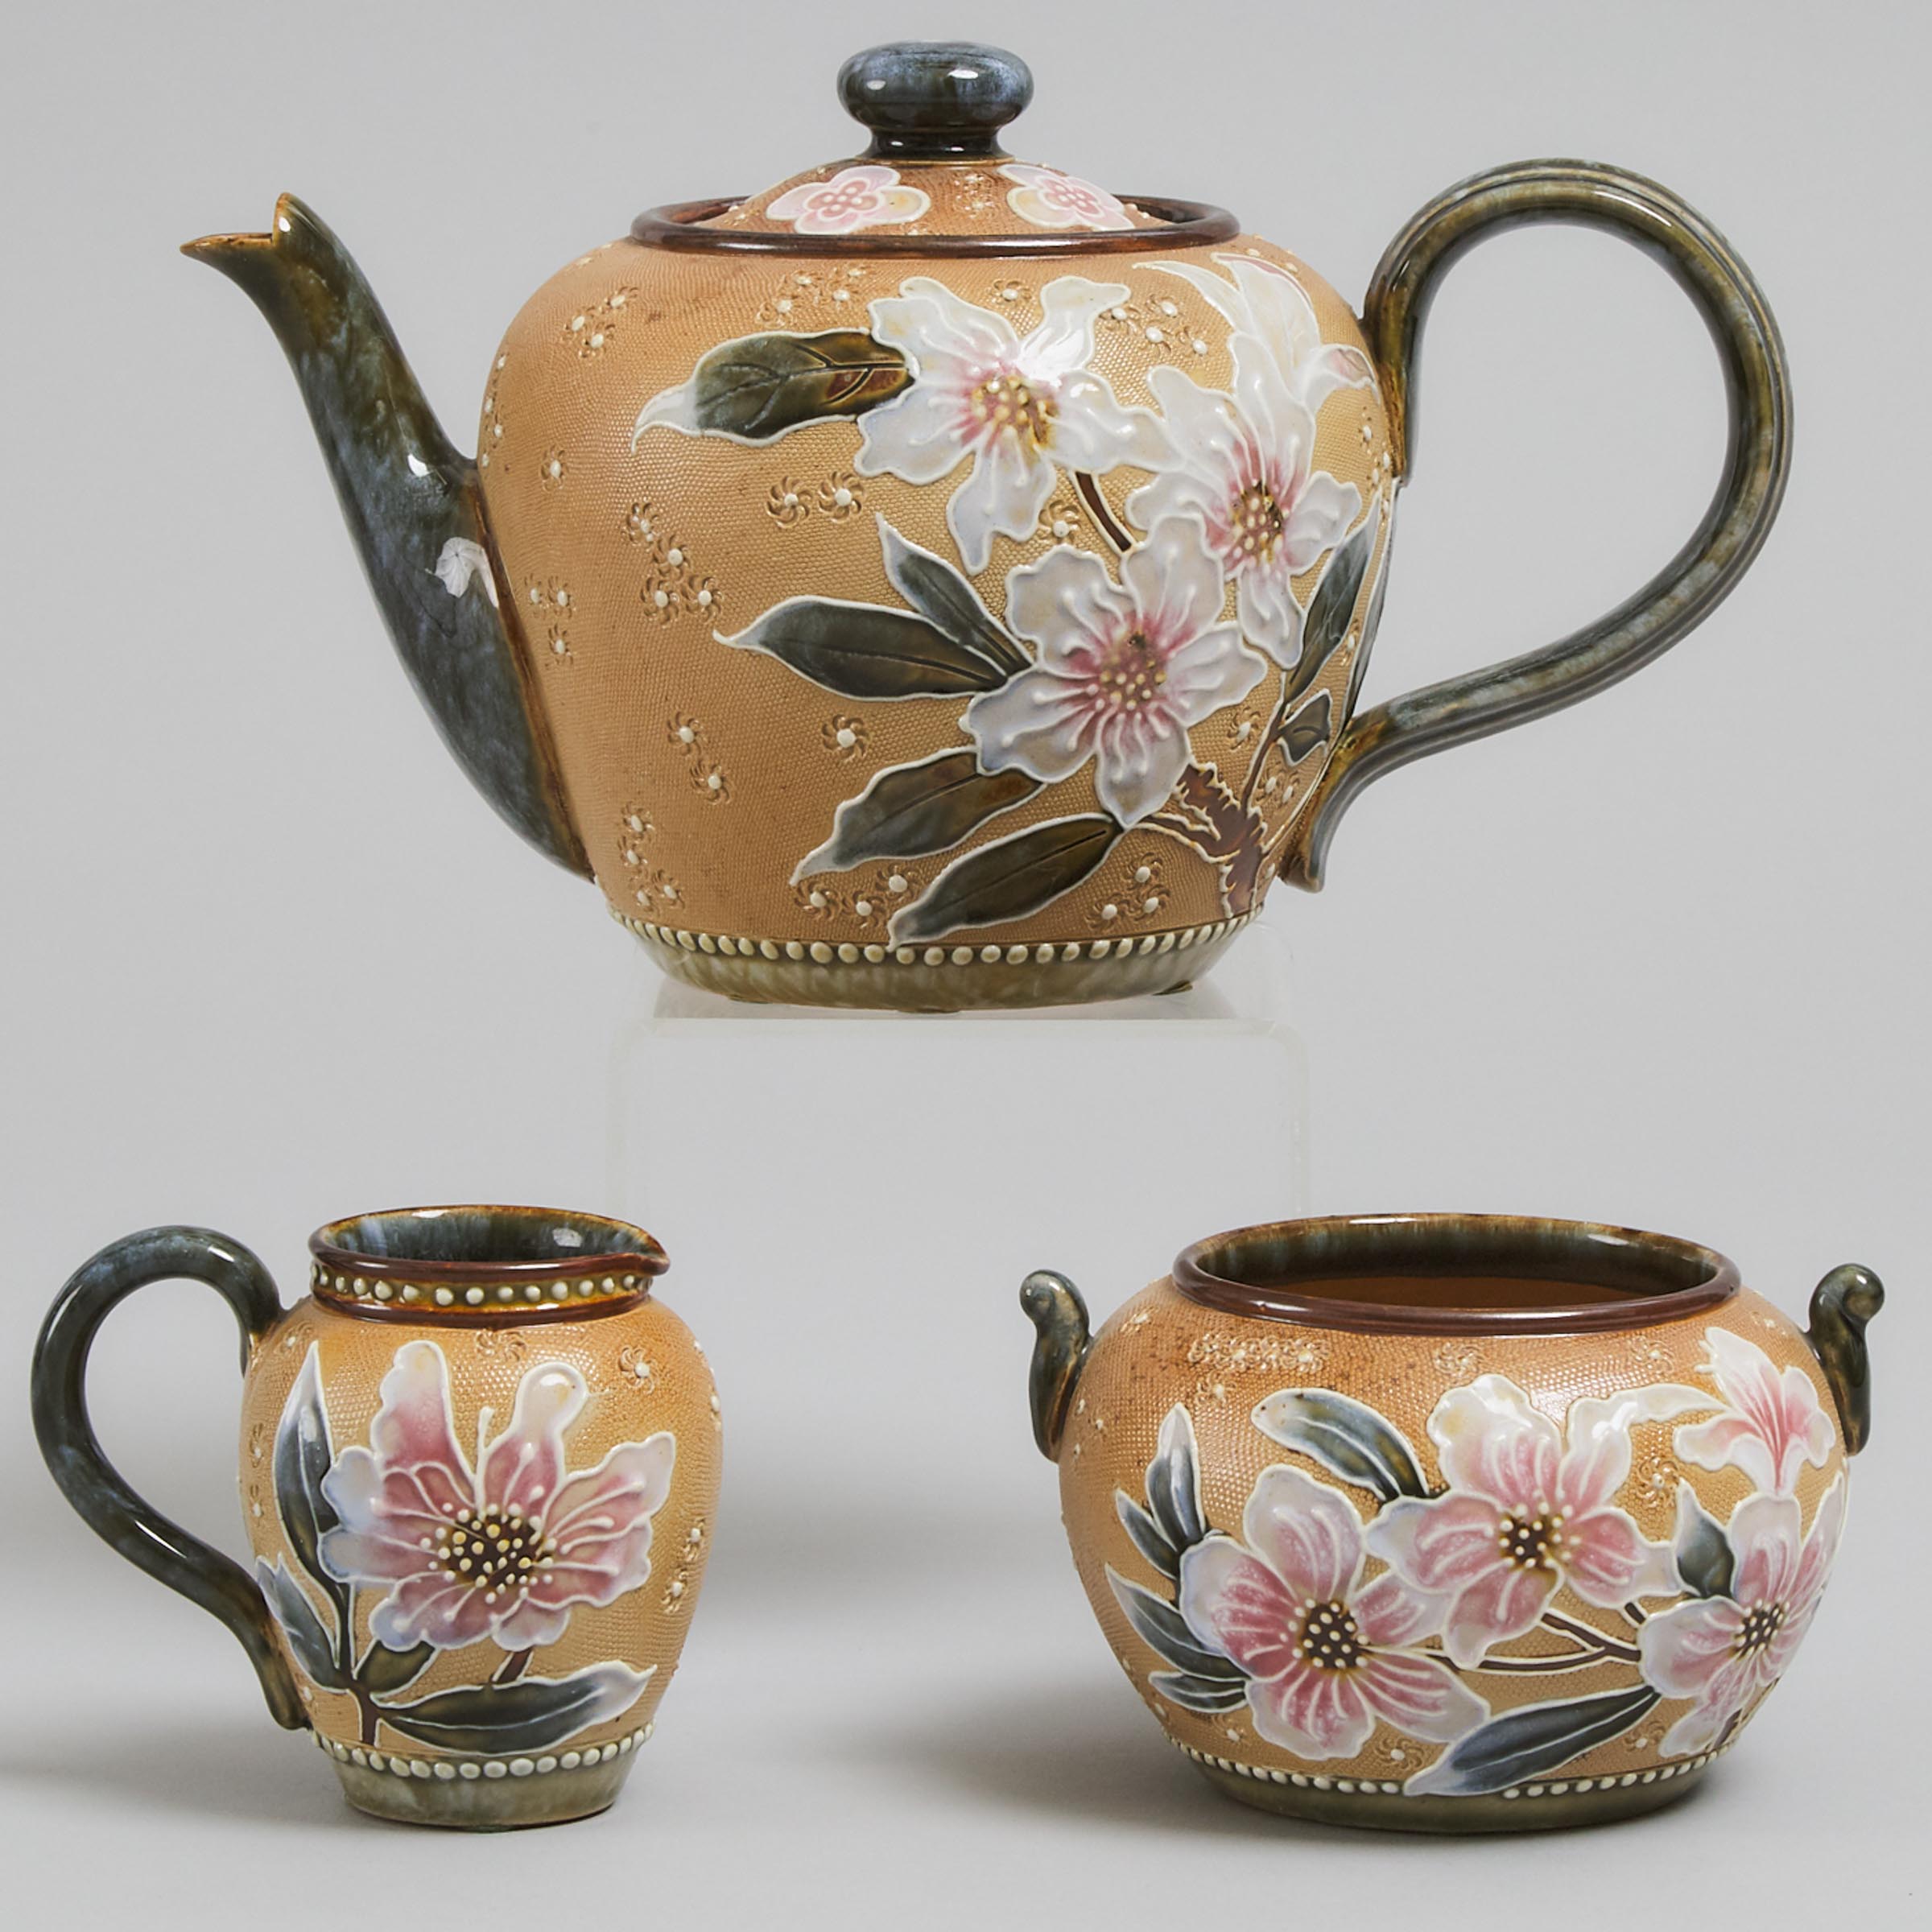 Royal Doulton 'Doulton & Slater's Patent' Stoneware Tea Service, early 20th century